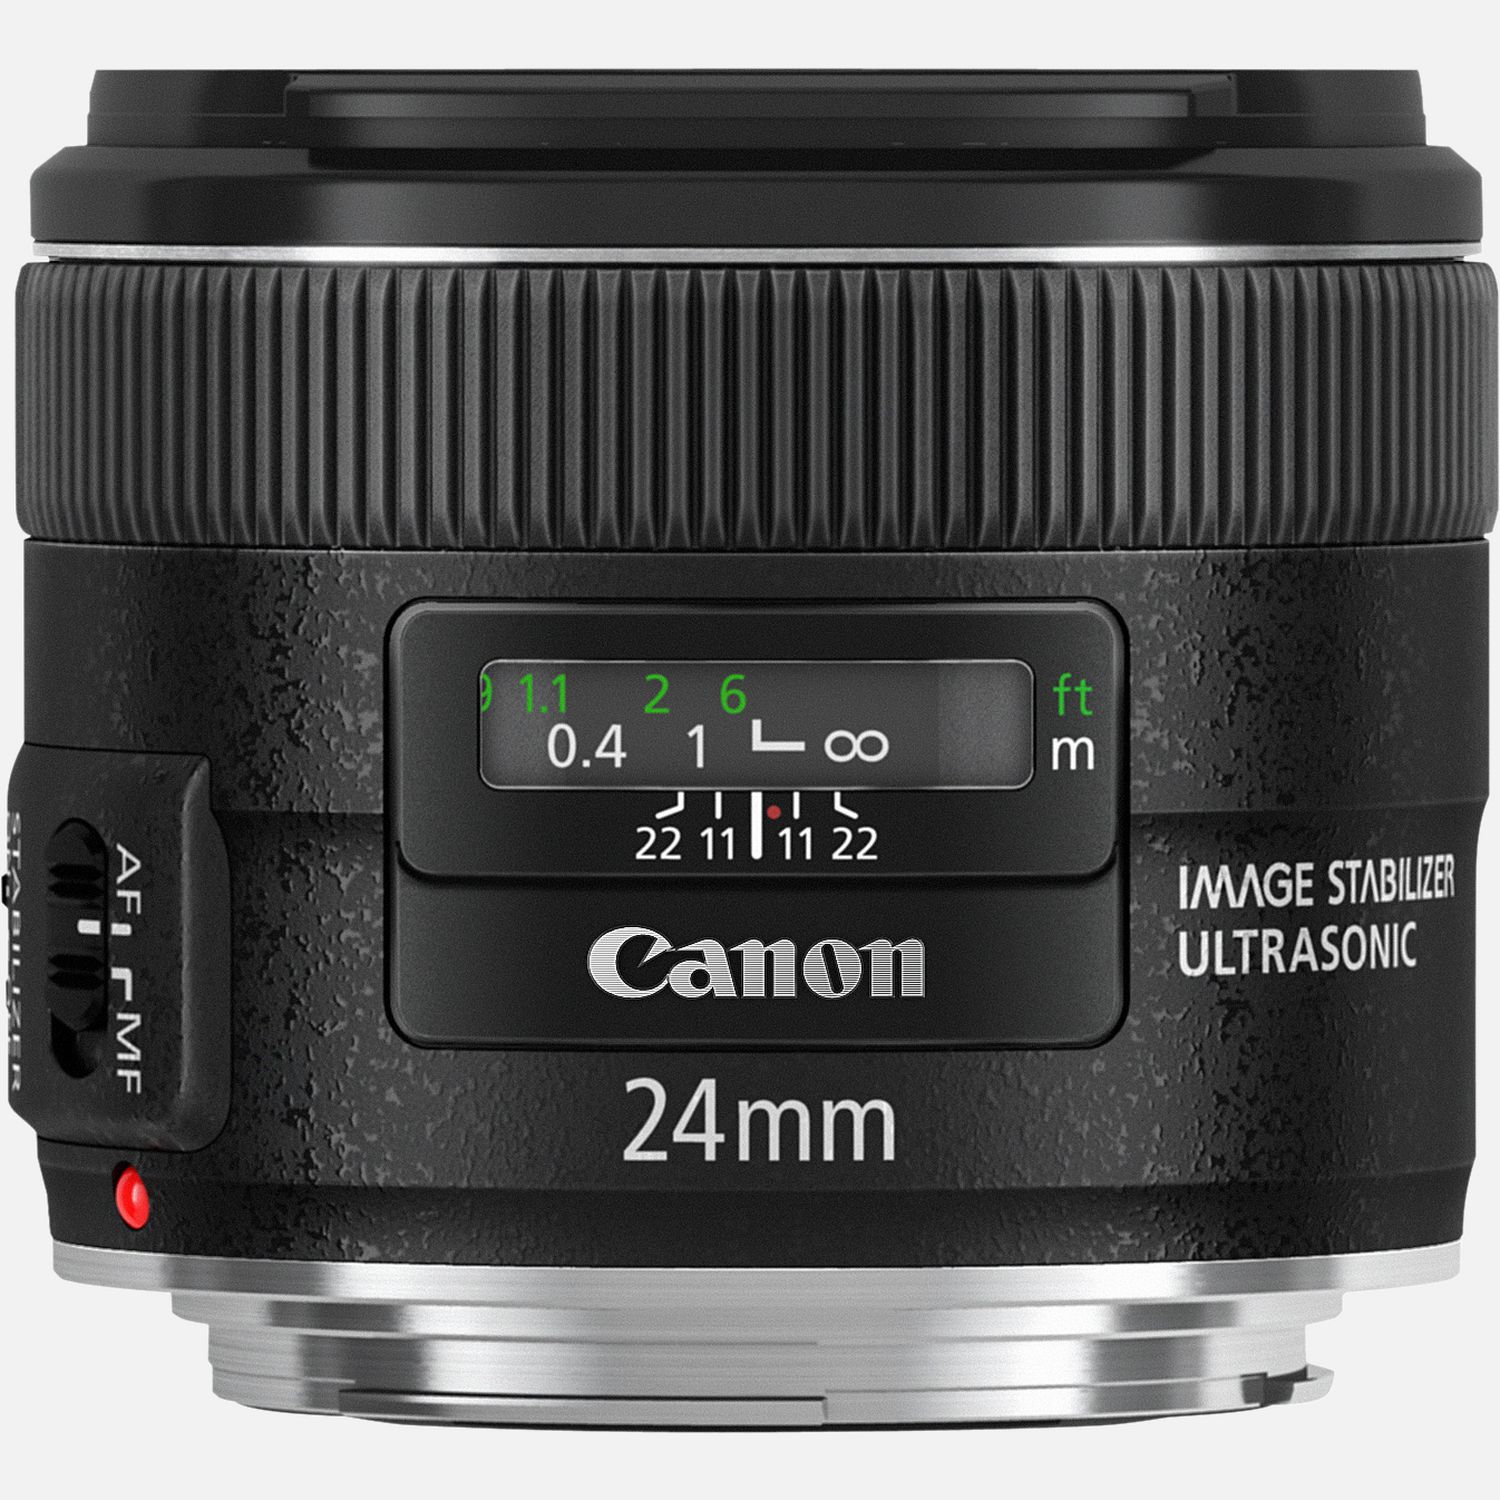 Image of Obiettivo Canon EF 24 mm f/2.8 IS USM